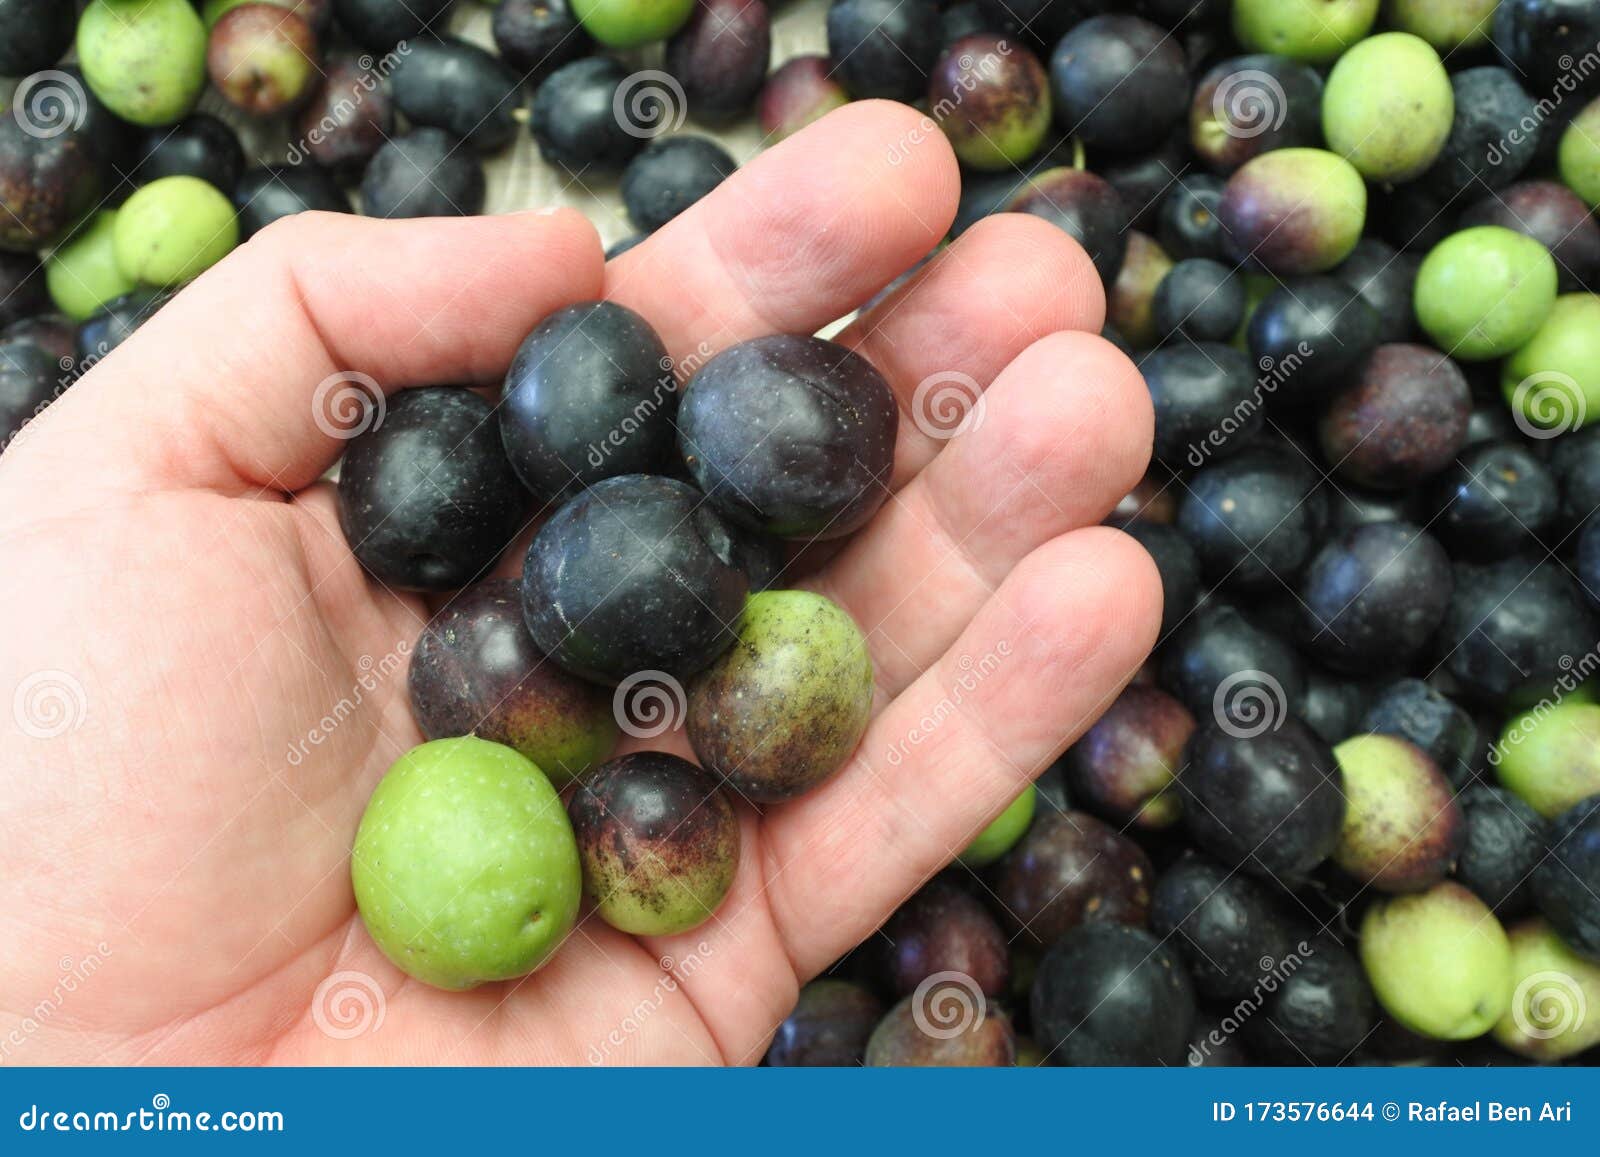 farmer hand holding manzanilla olives